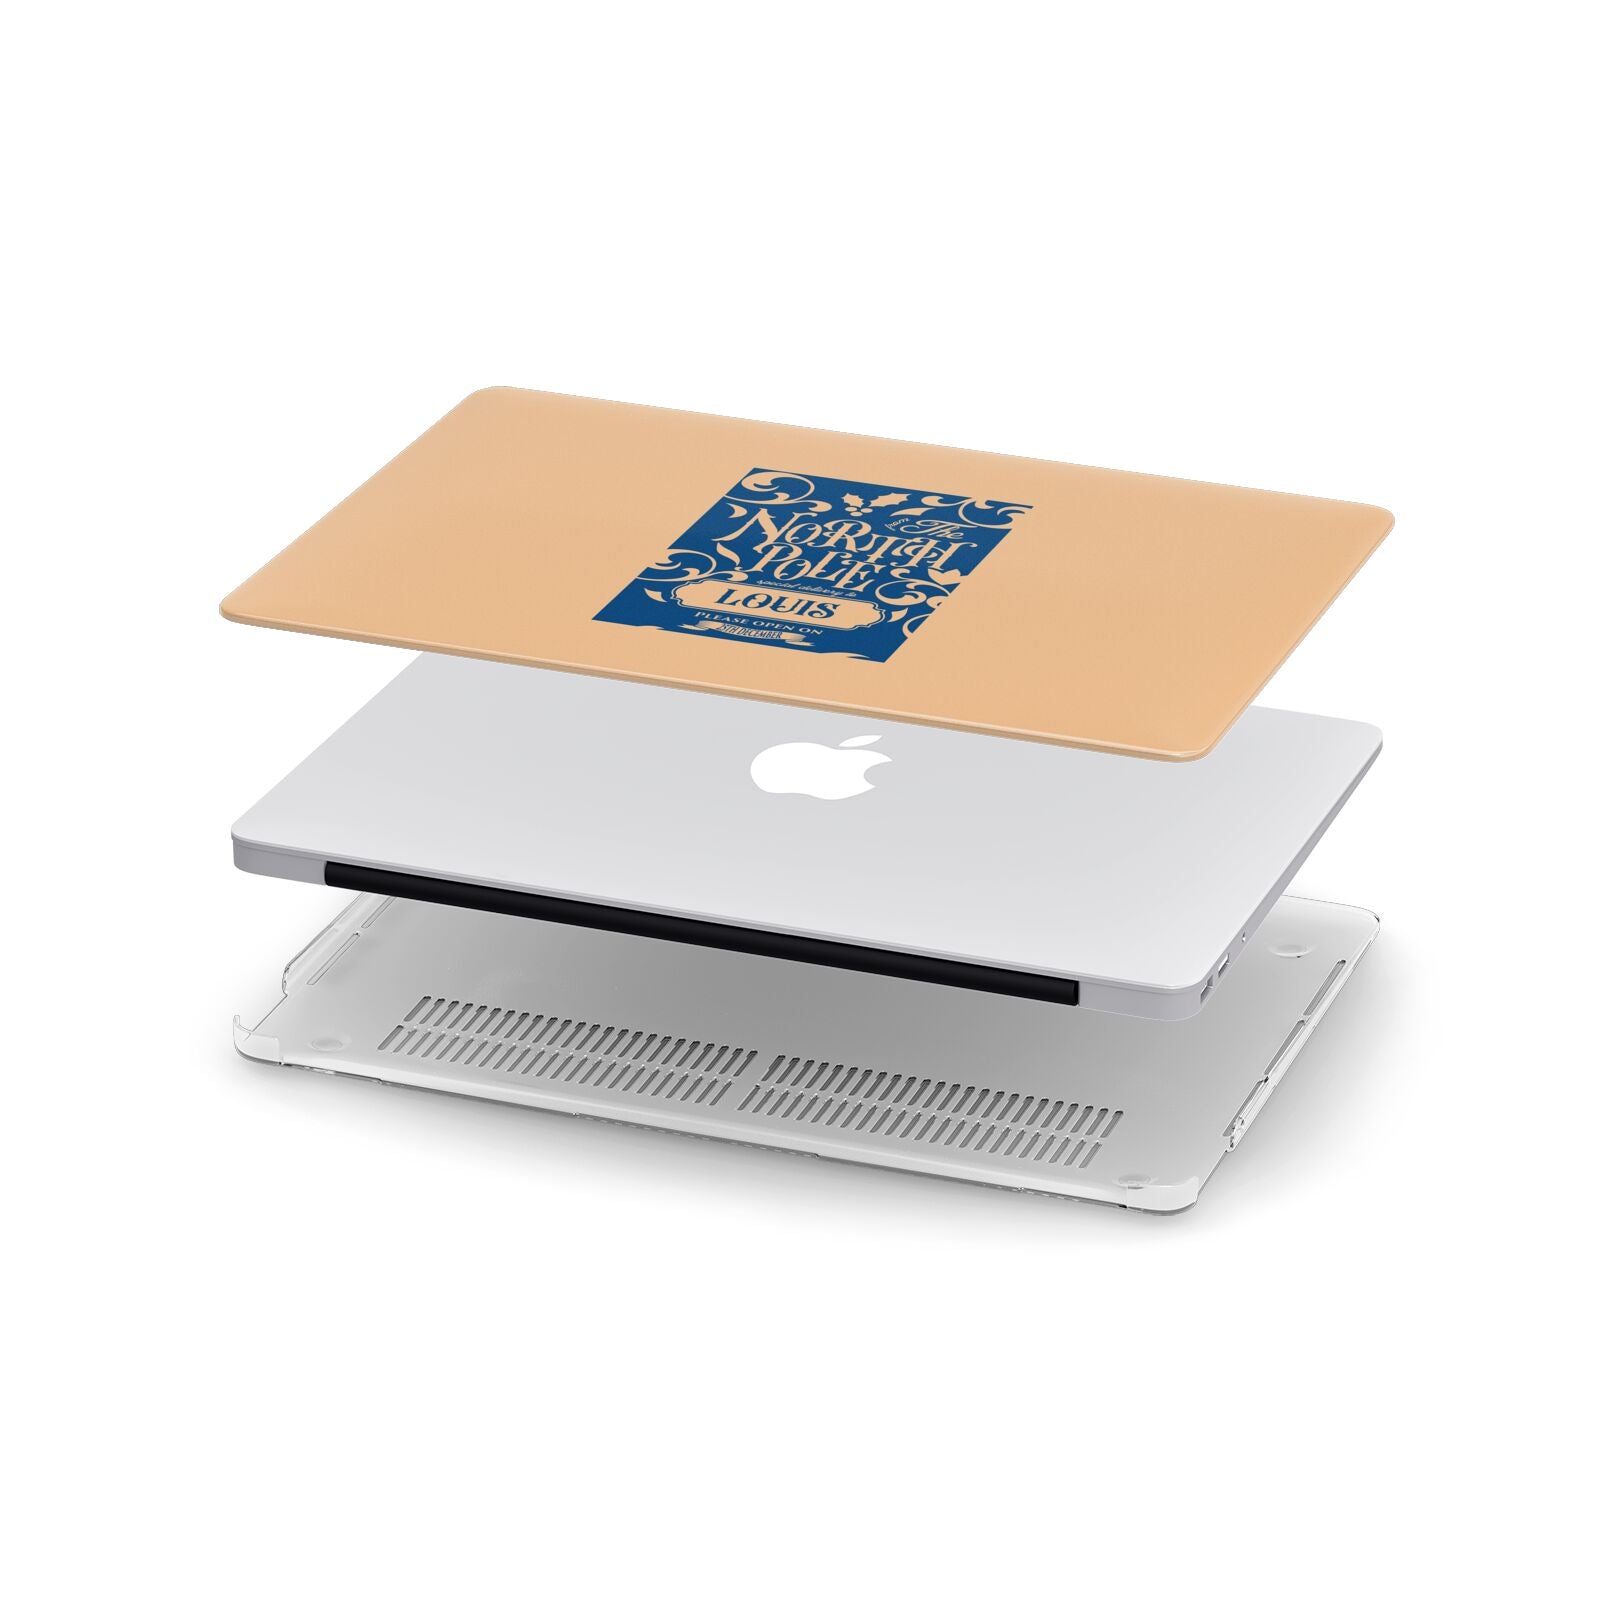 North Pole Personalised Apple MacBook Case in Detail